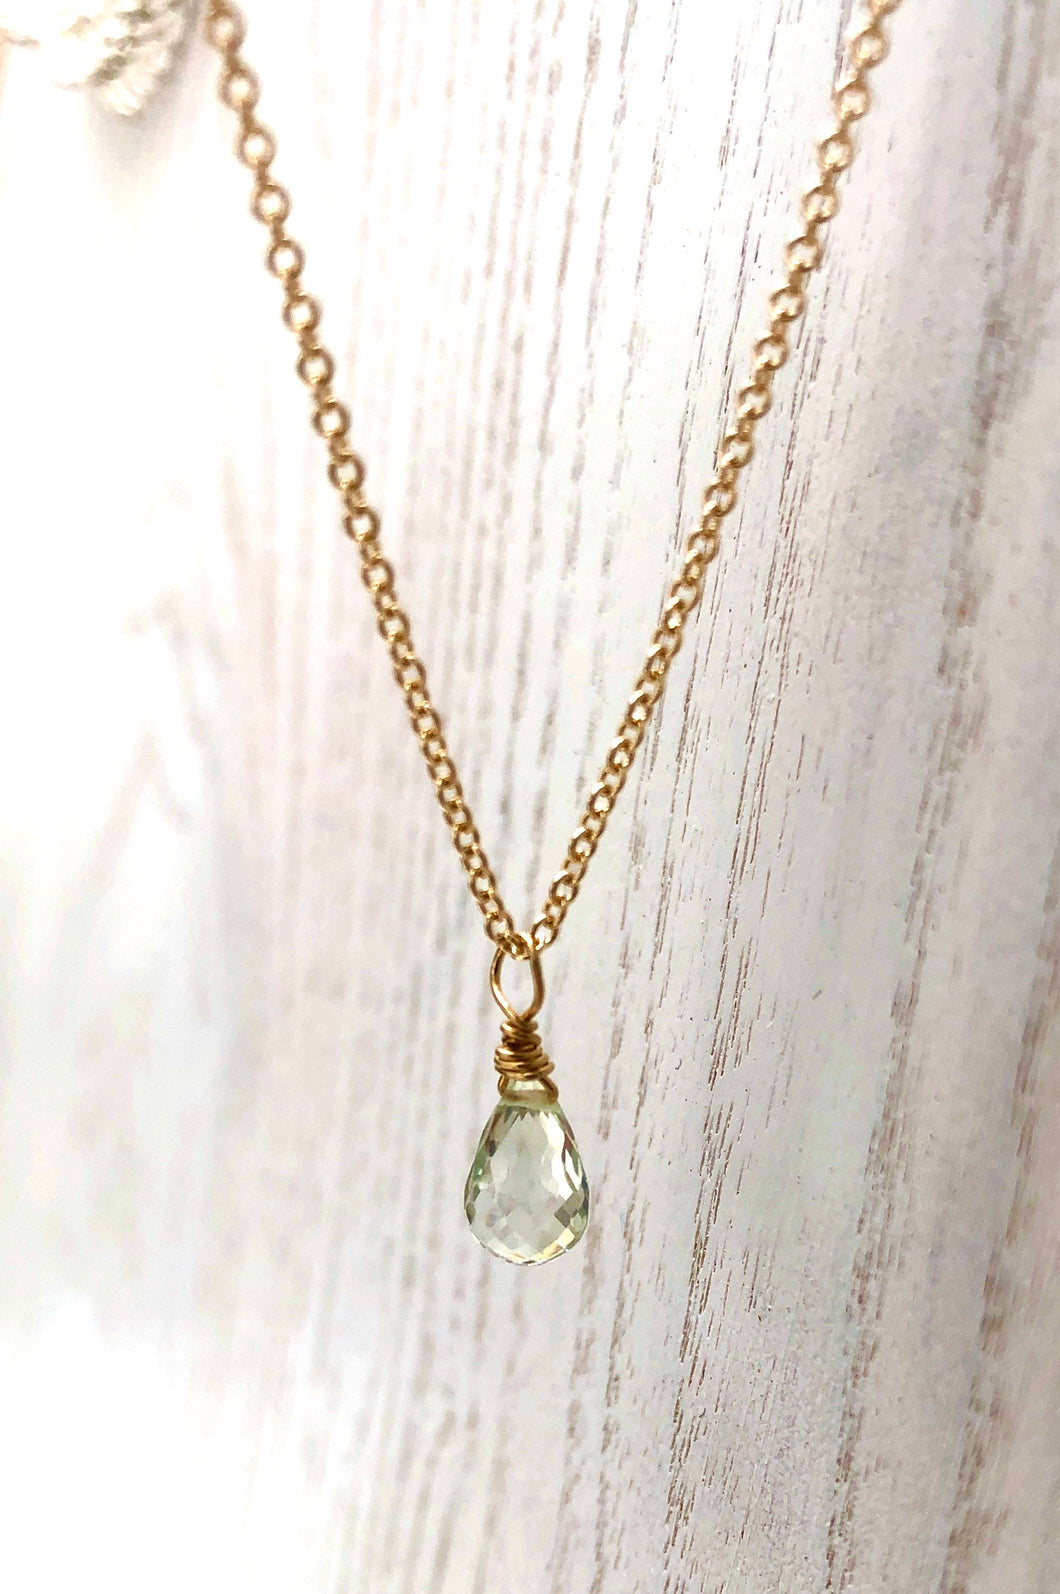 Green Amethyst aquamarine droplet necklace